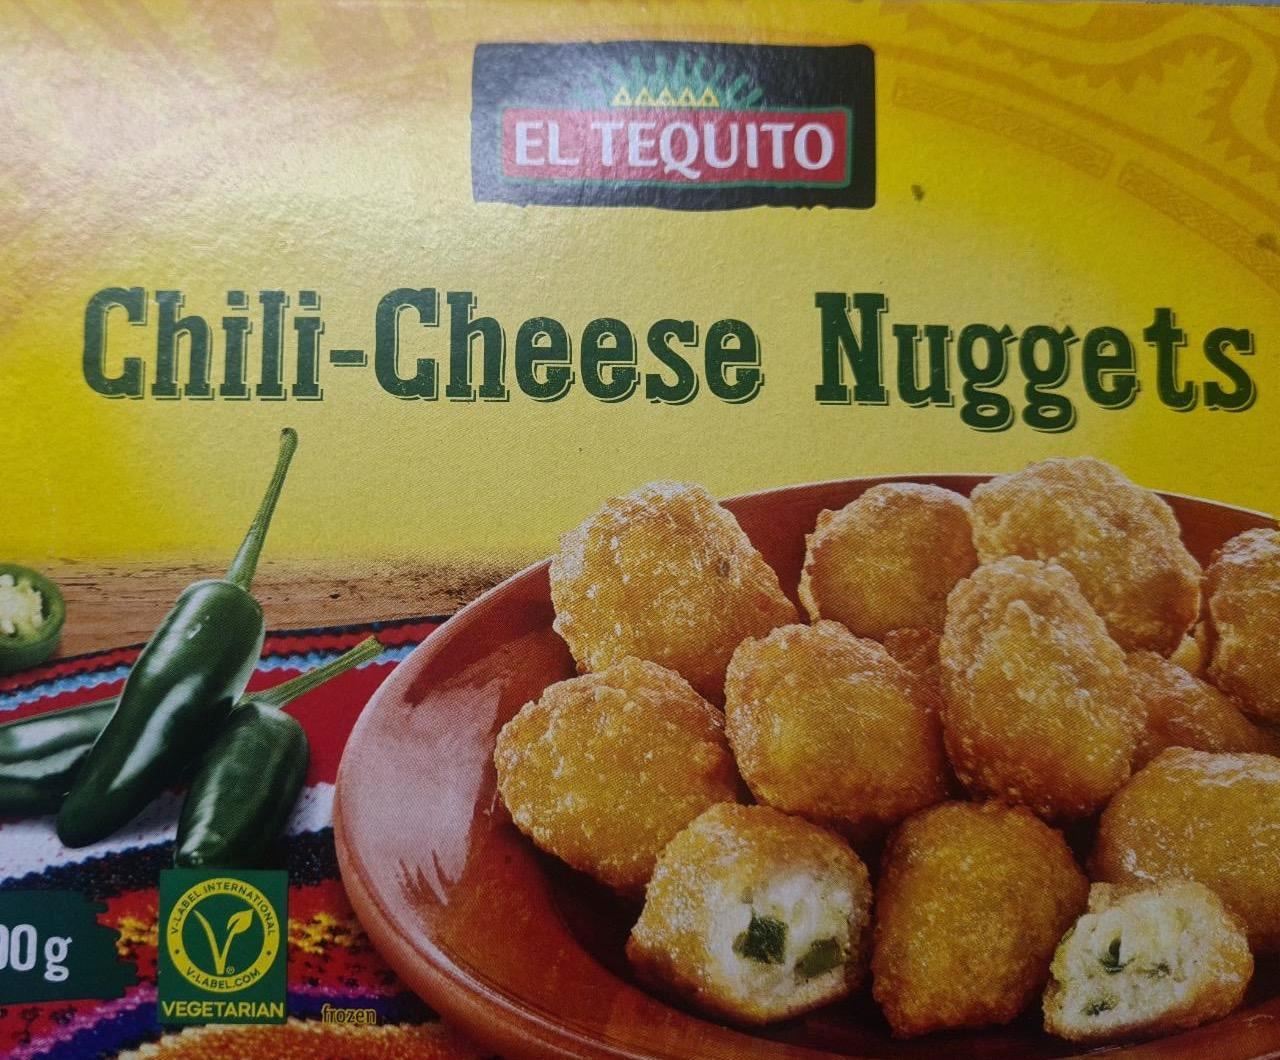 Képek - Chili-cheese nuggets El Tequito